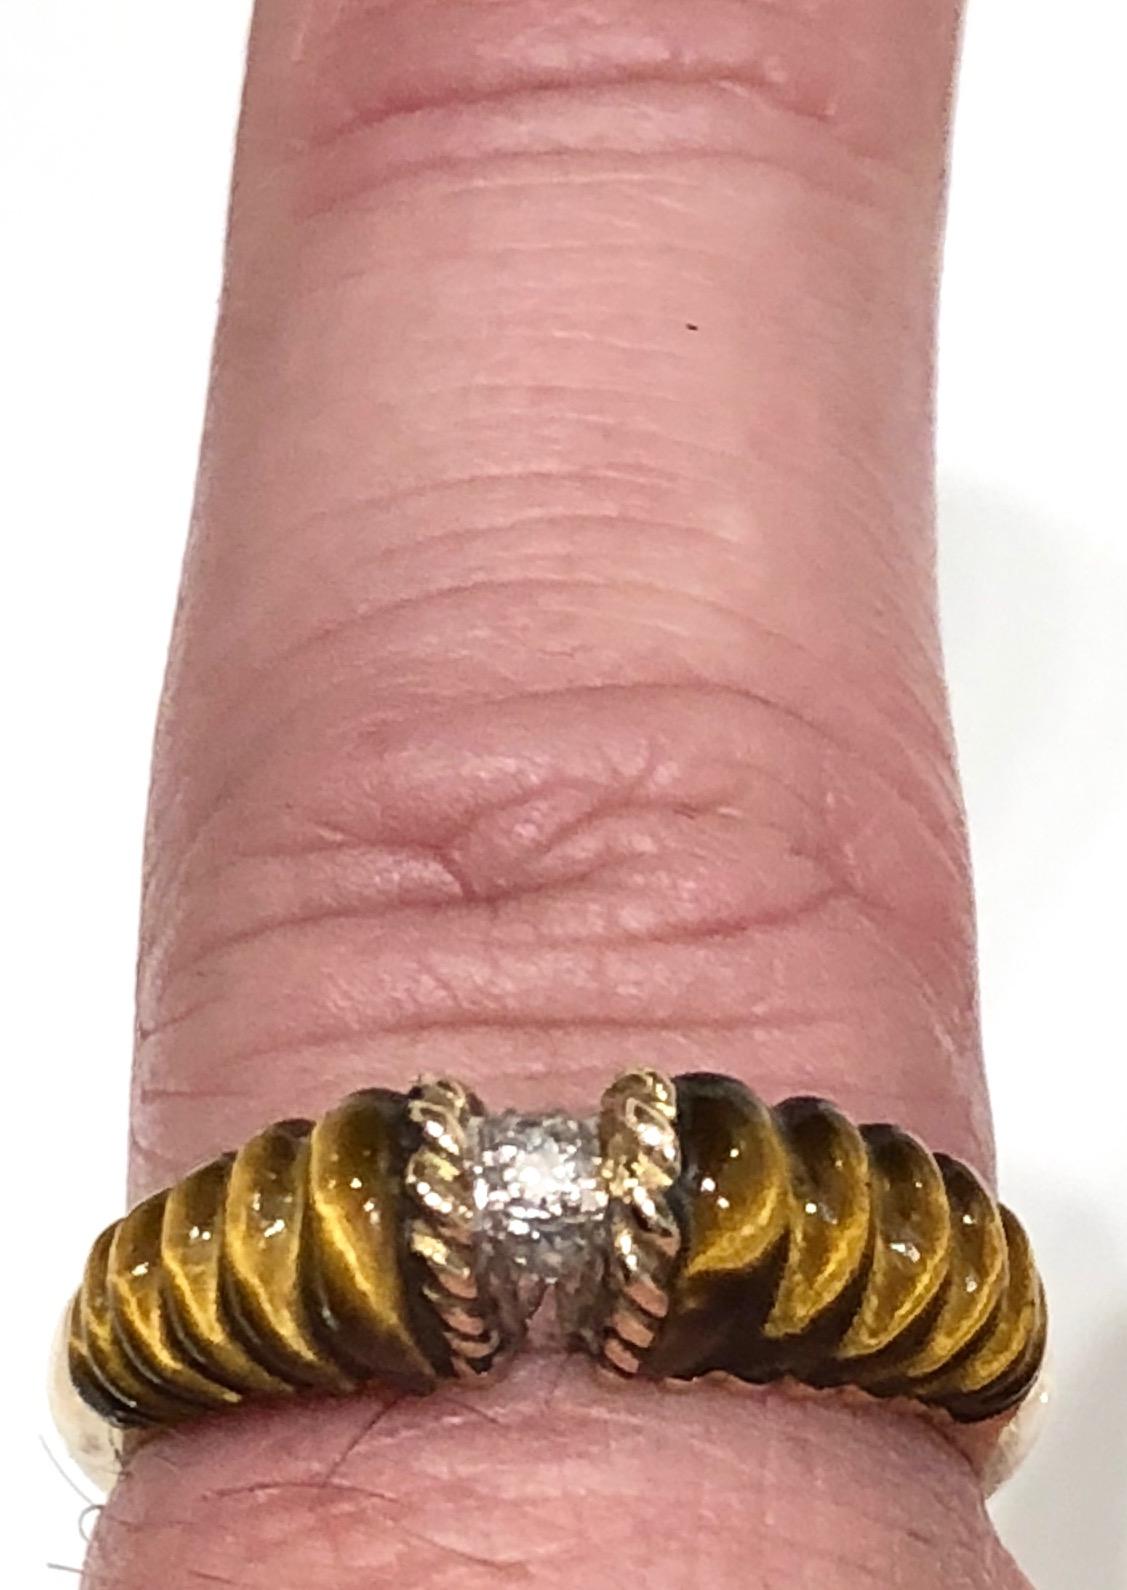 Women's Carved Tigers Eye with Diamond Inset Ring, 14 Karat Gold, circa 1970s